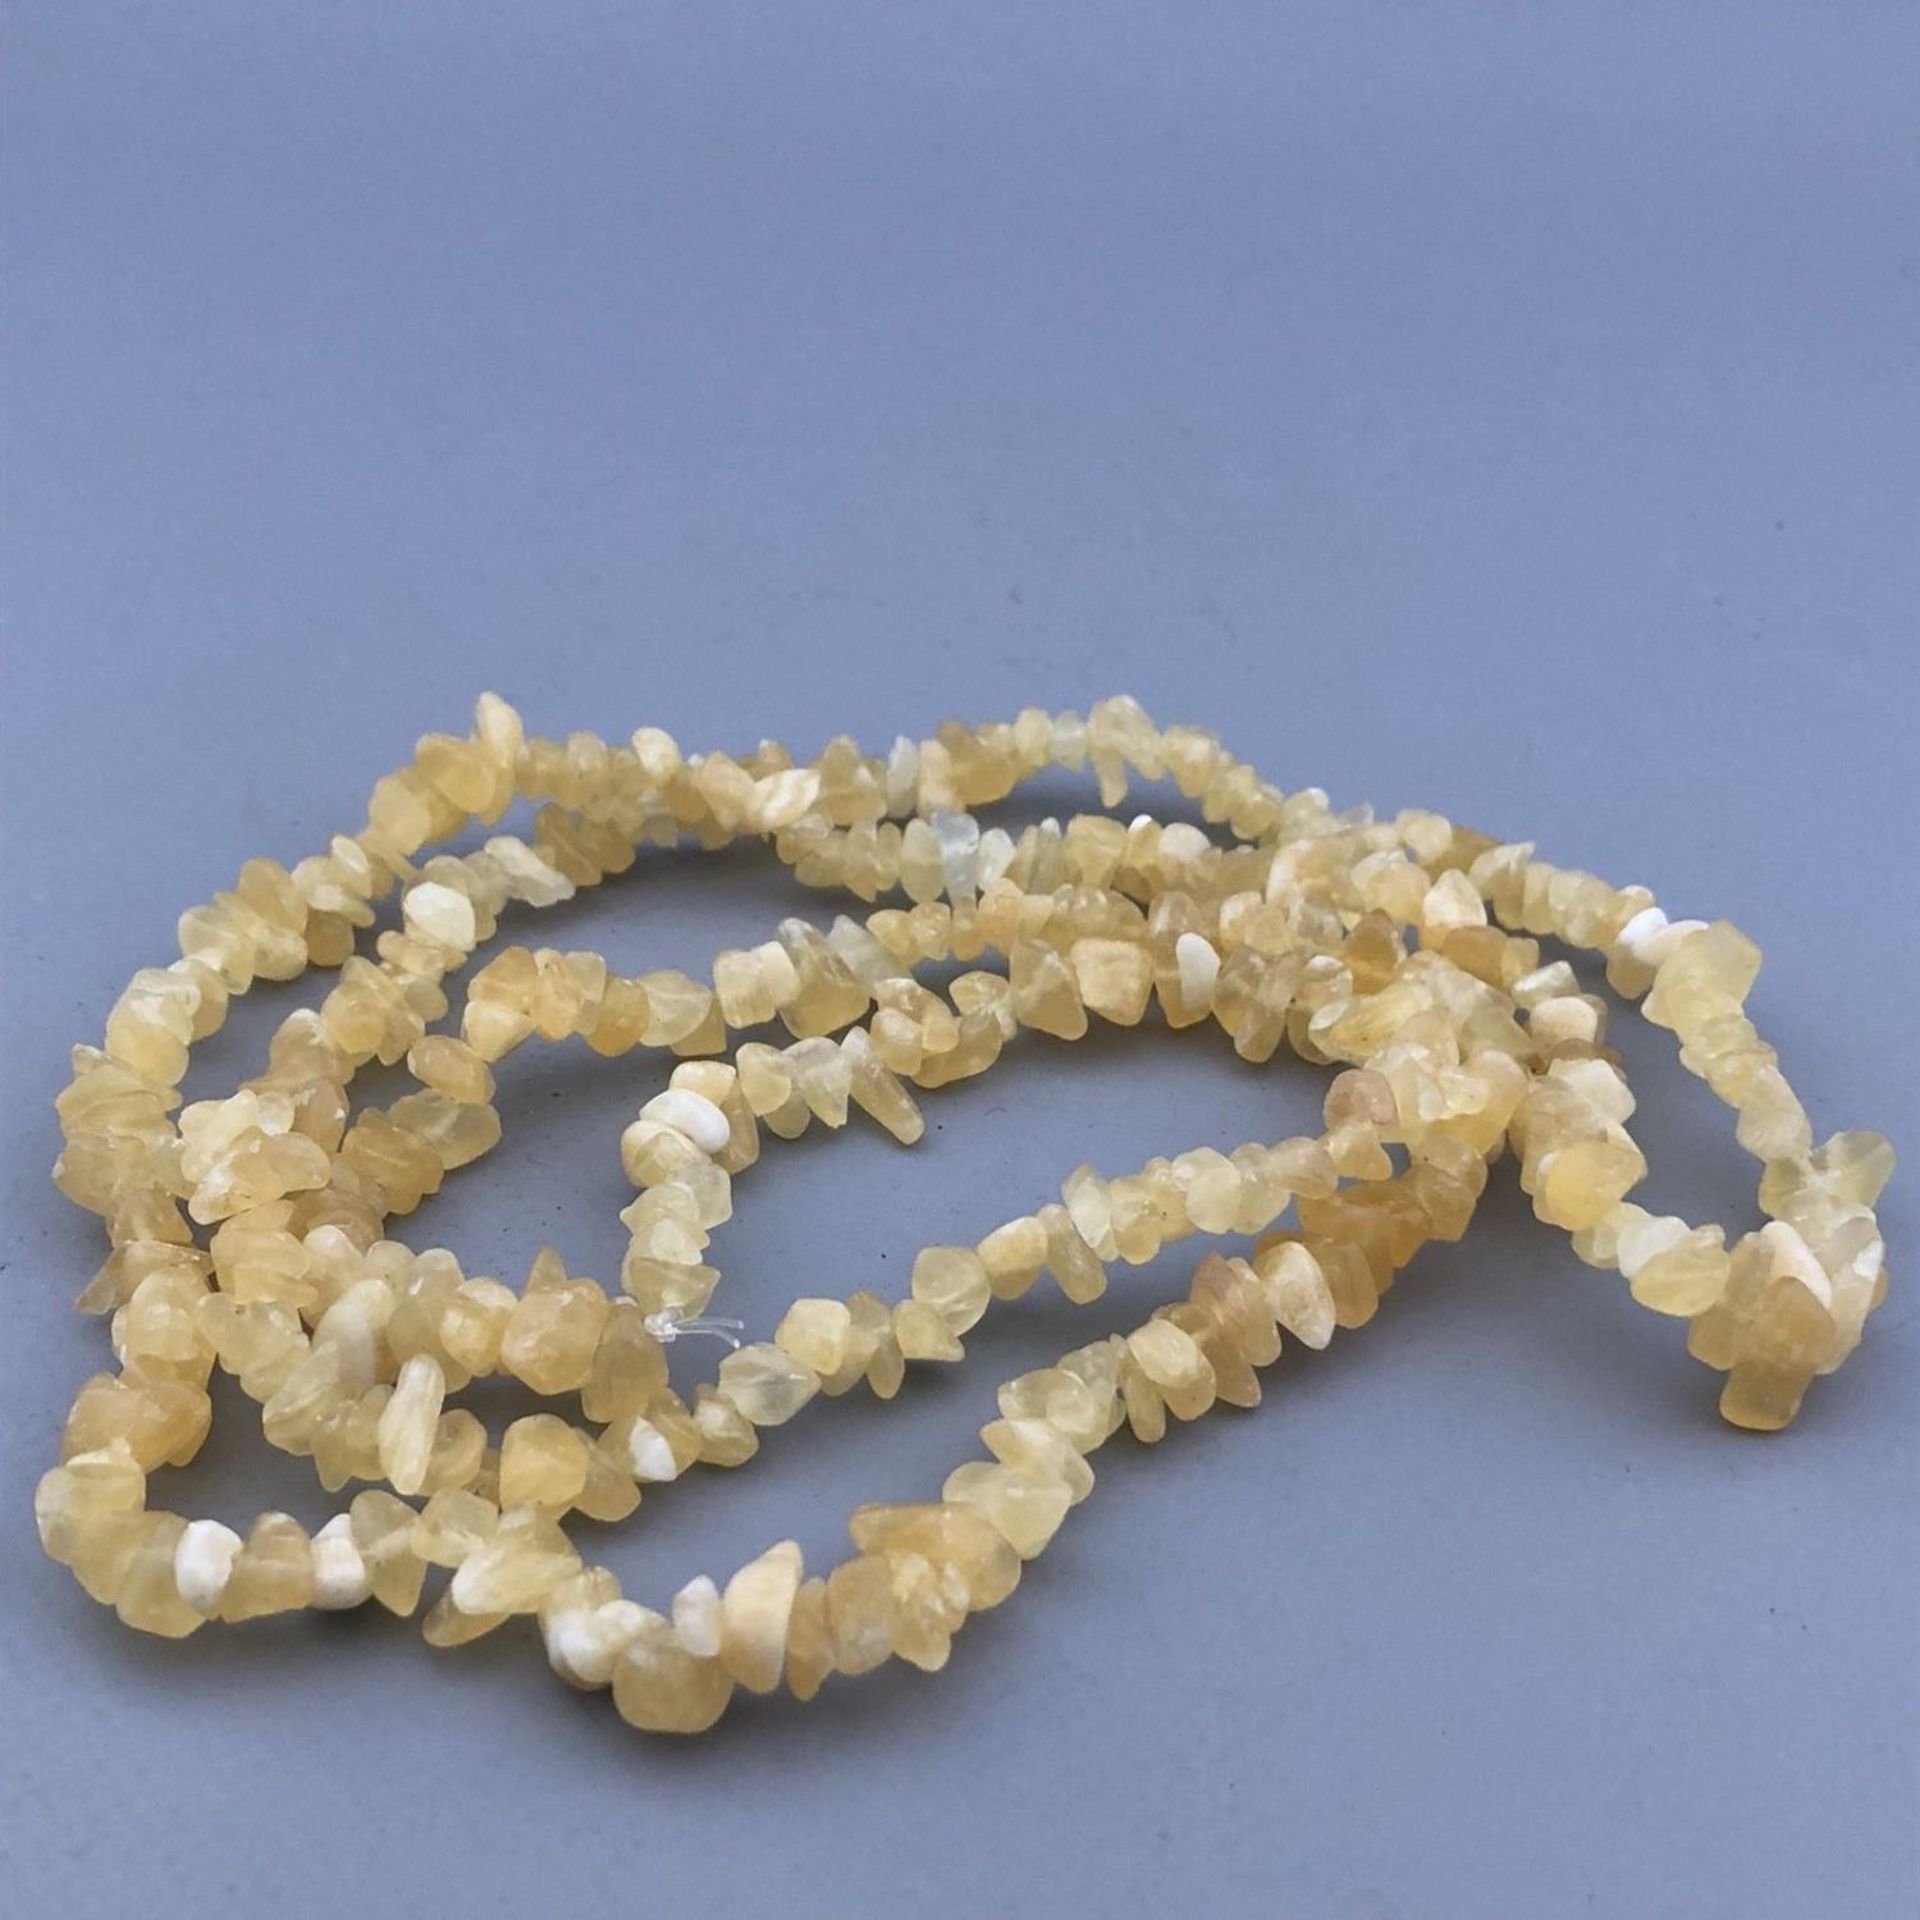 A long 35" string necklace of yellow / white / lemon quartz natural gemstones